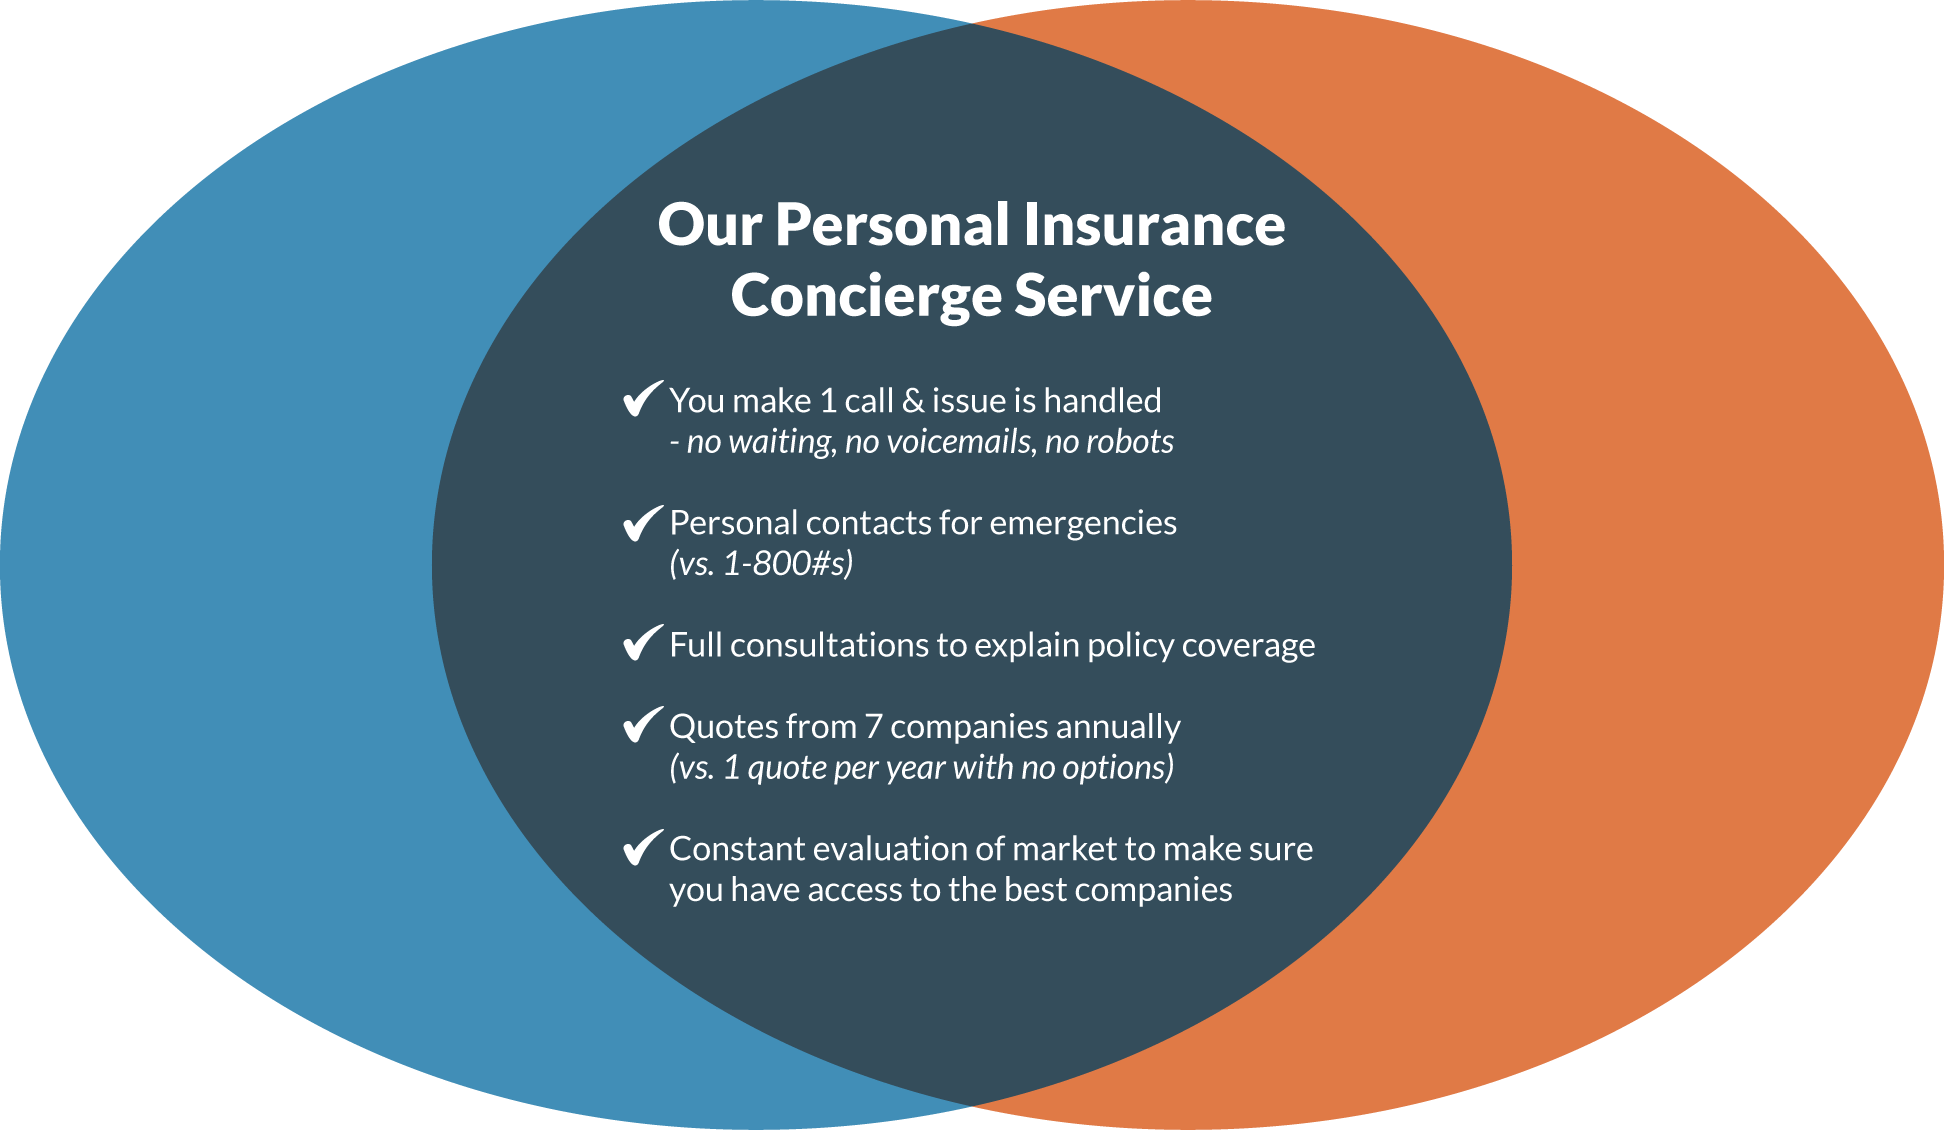 Personal Insurance Concierge Service